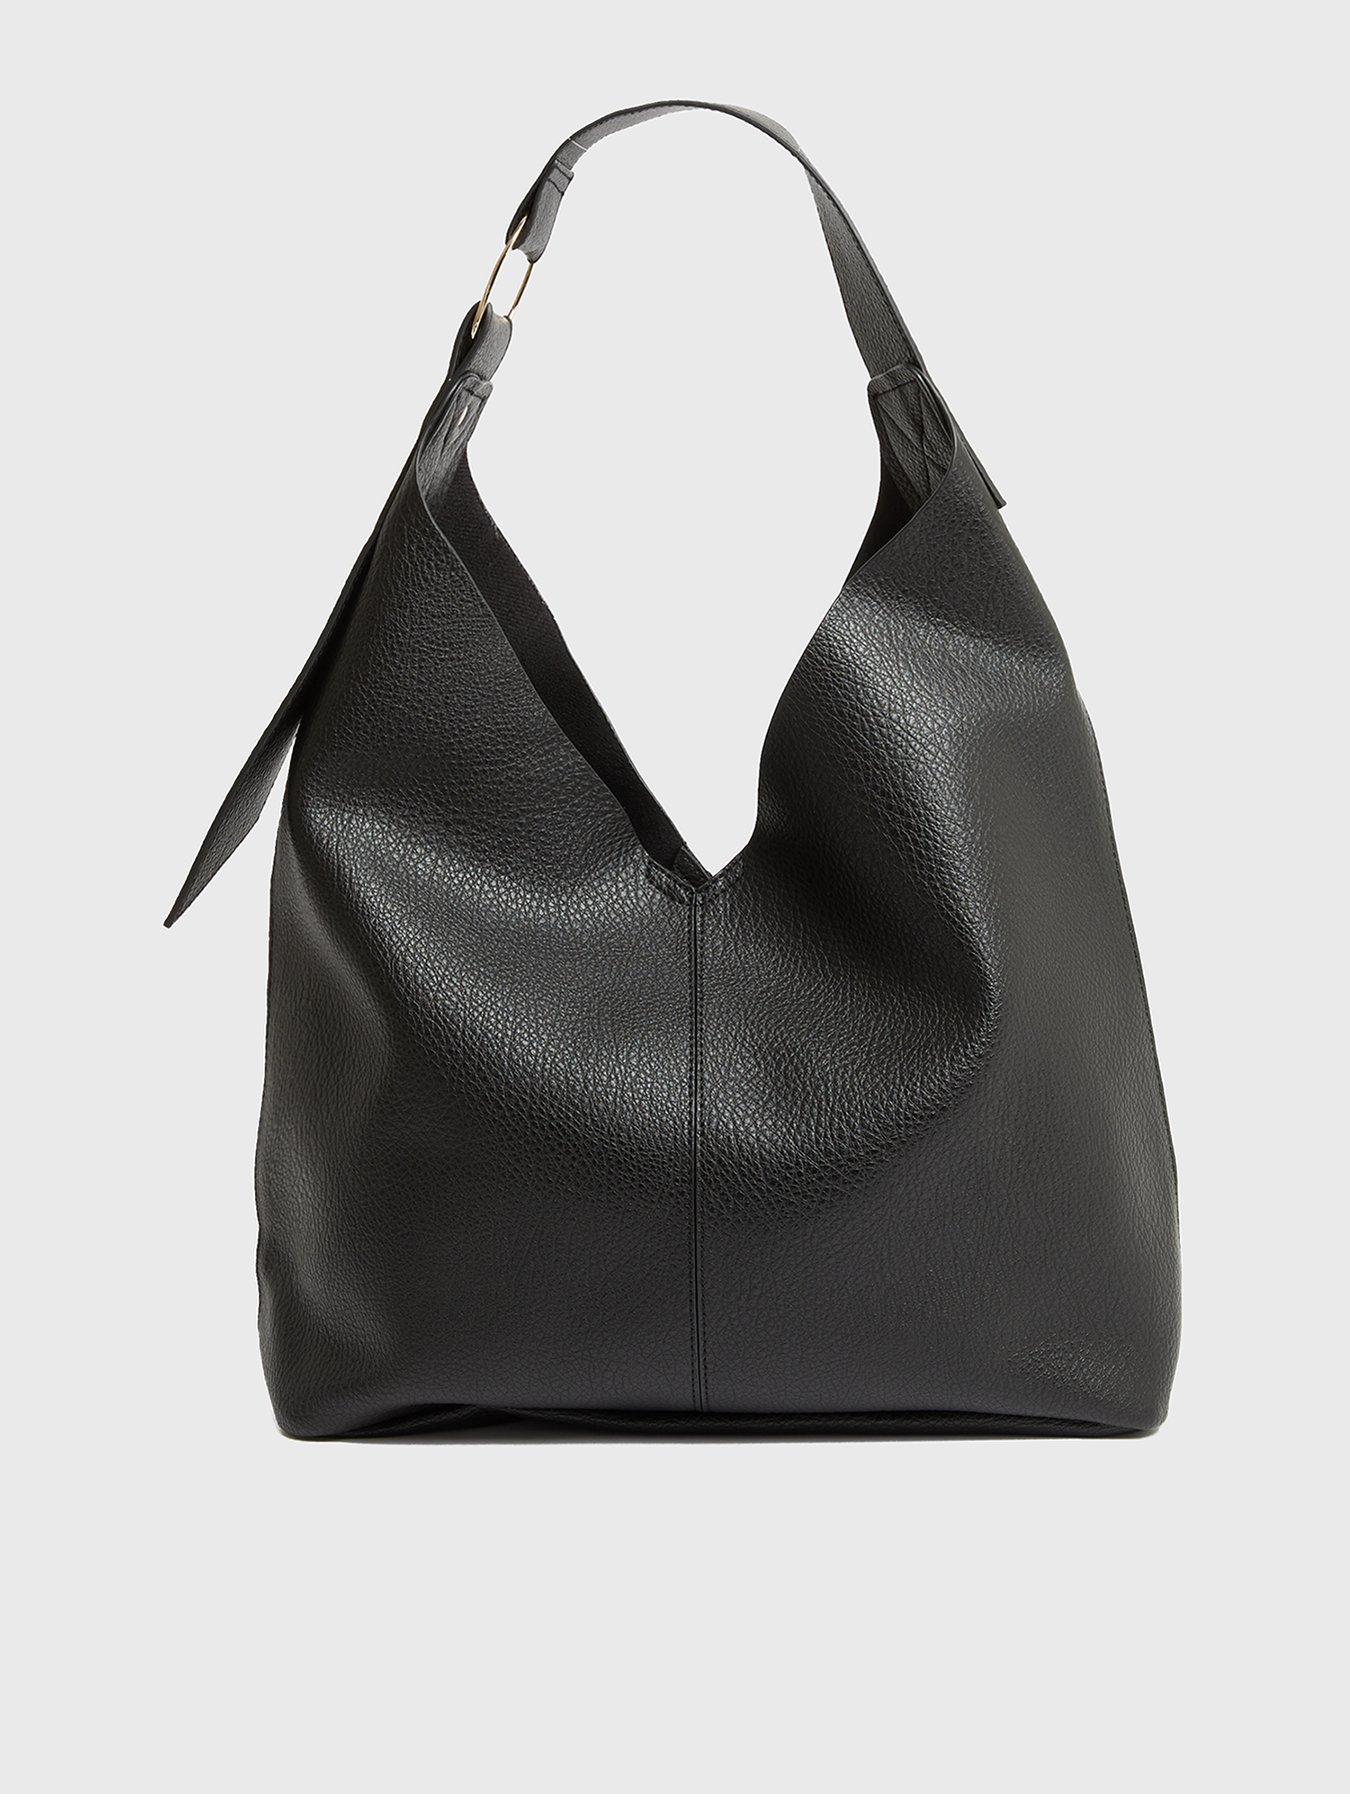 Women's Designer Large Hobo Bags Ladies Stylish Faux Leather New Look Handbag UK 